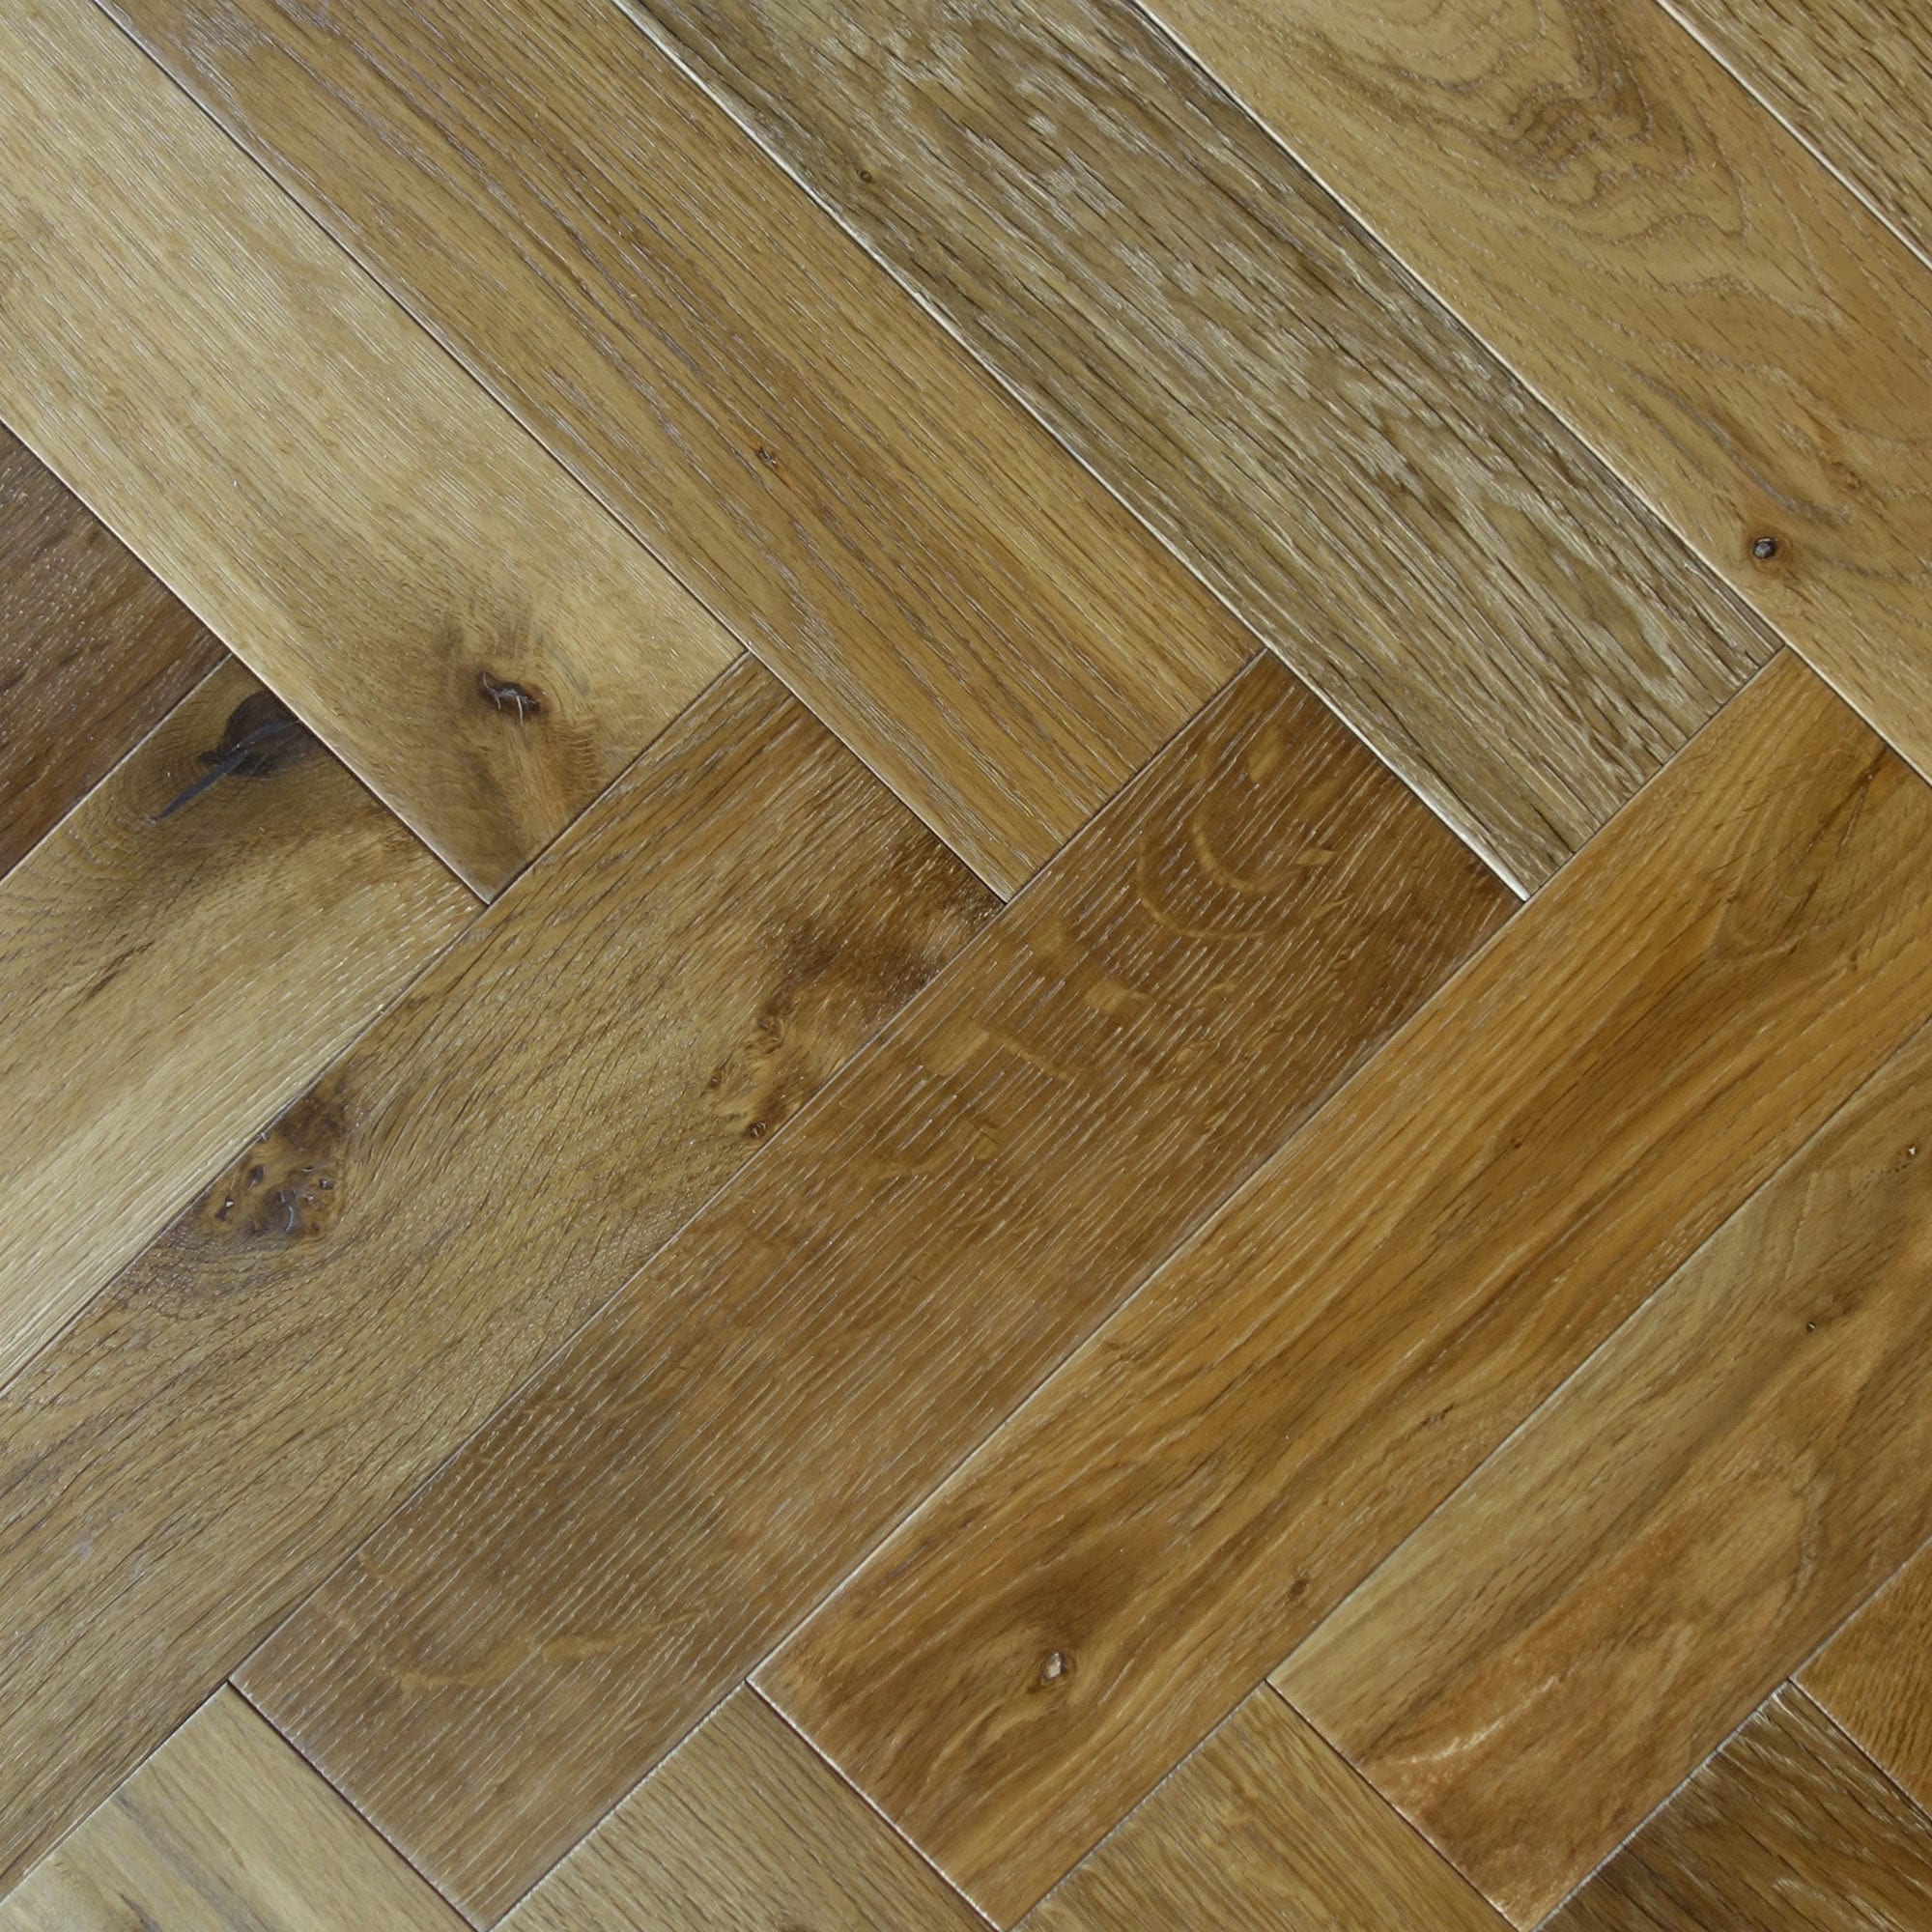 ZB201 Smoked Oak - Herringbone Parquet Oak Wooden Flooring From V4